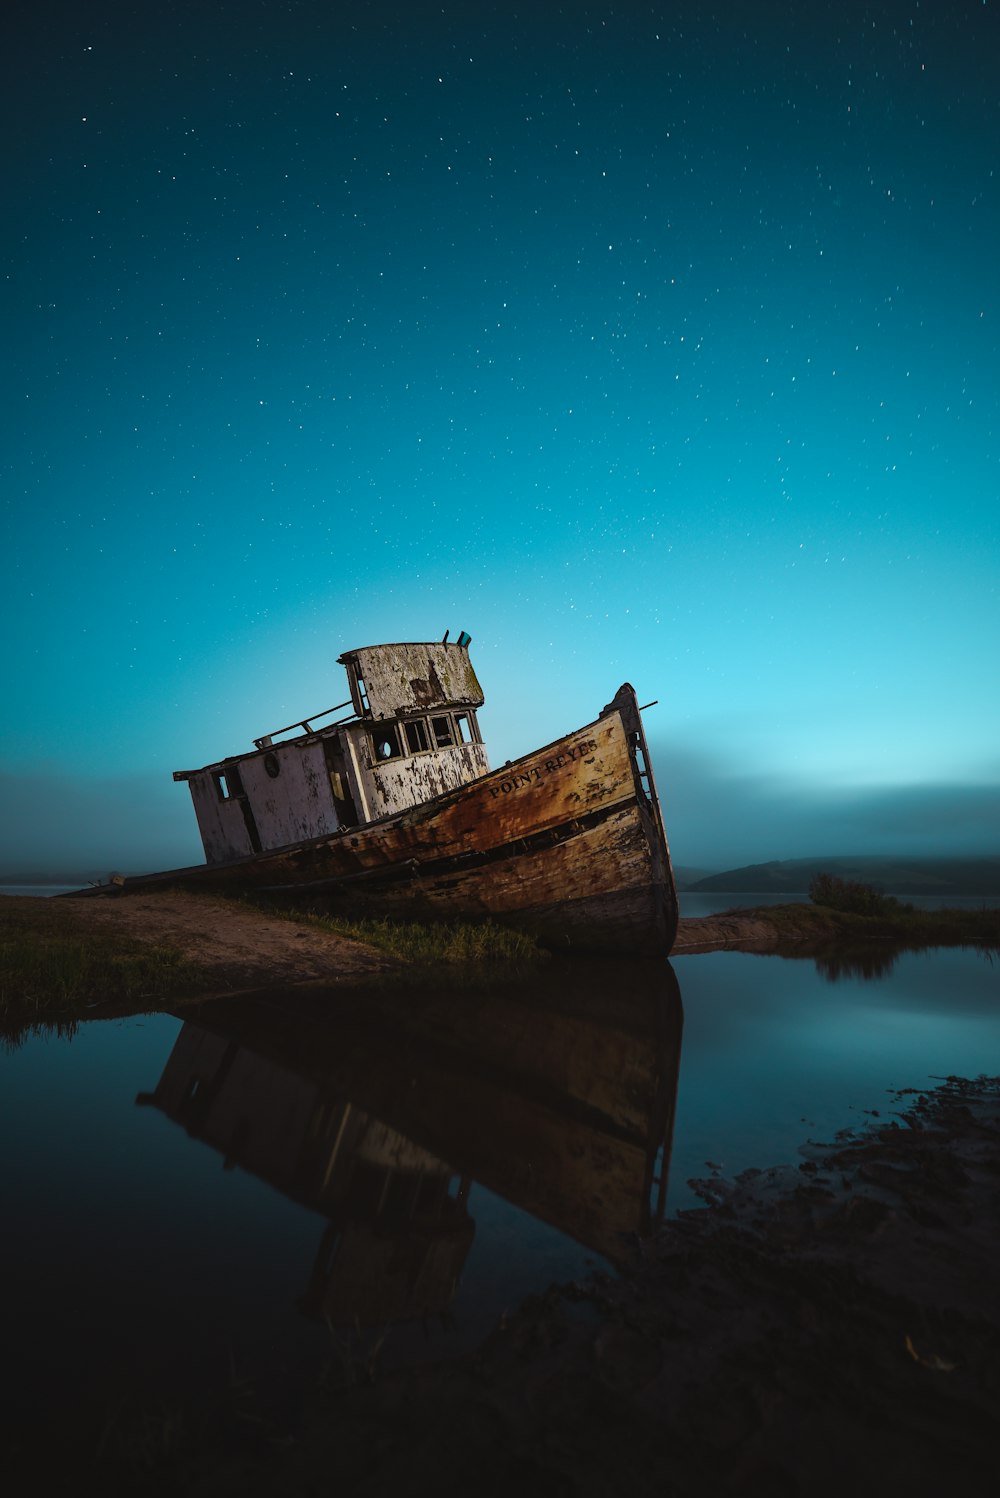 abandoned ship on seashore under sky with stars